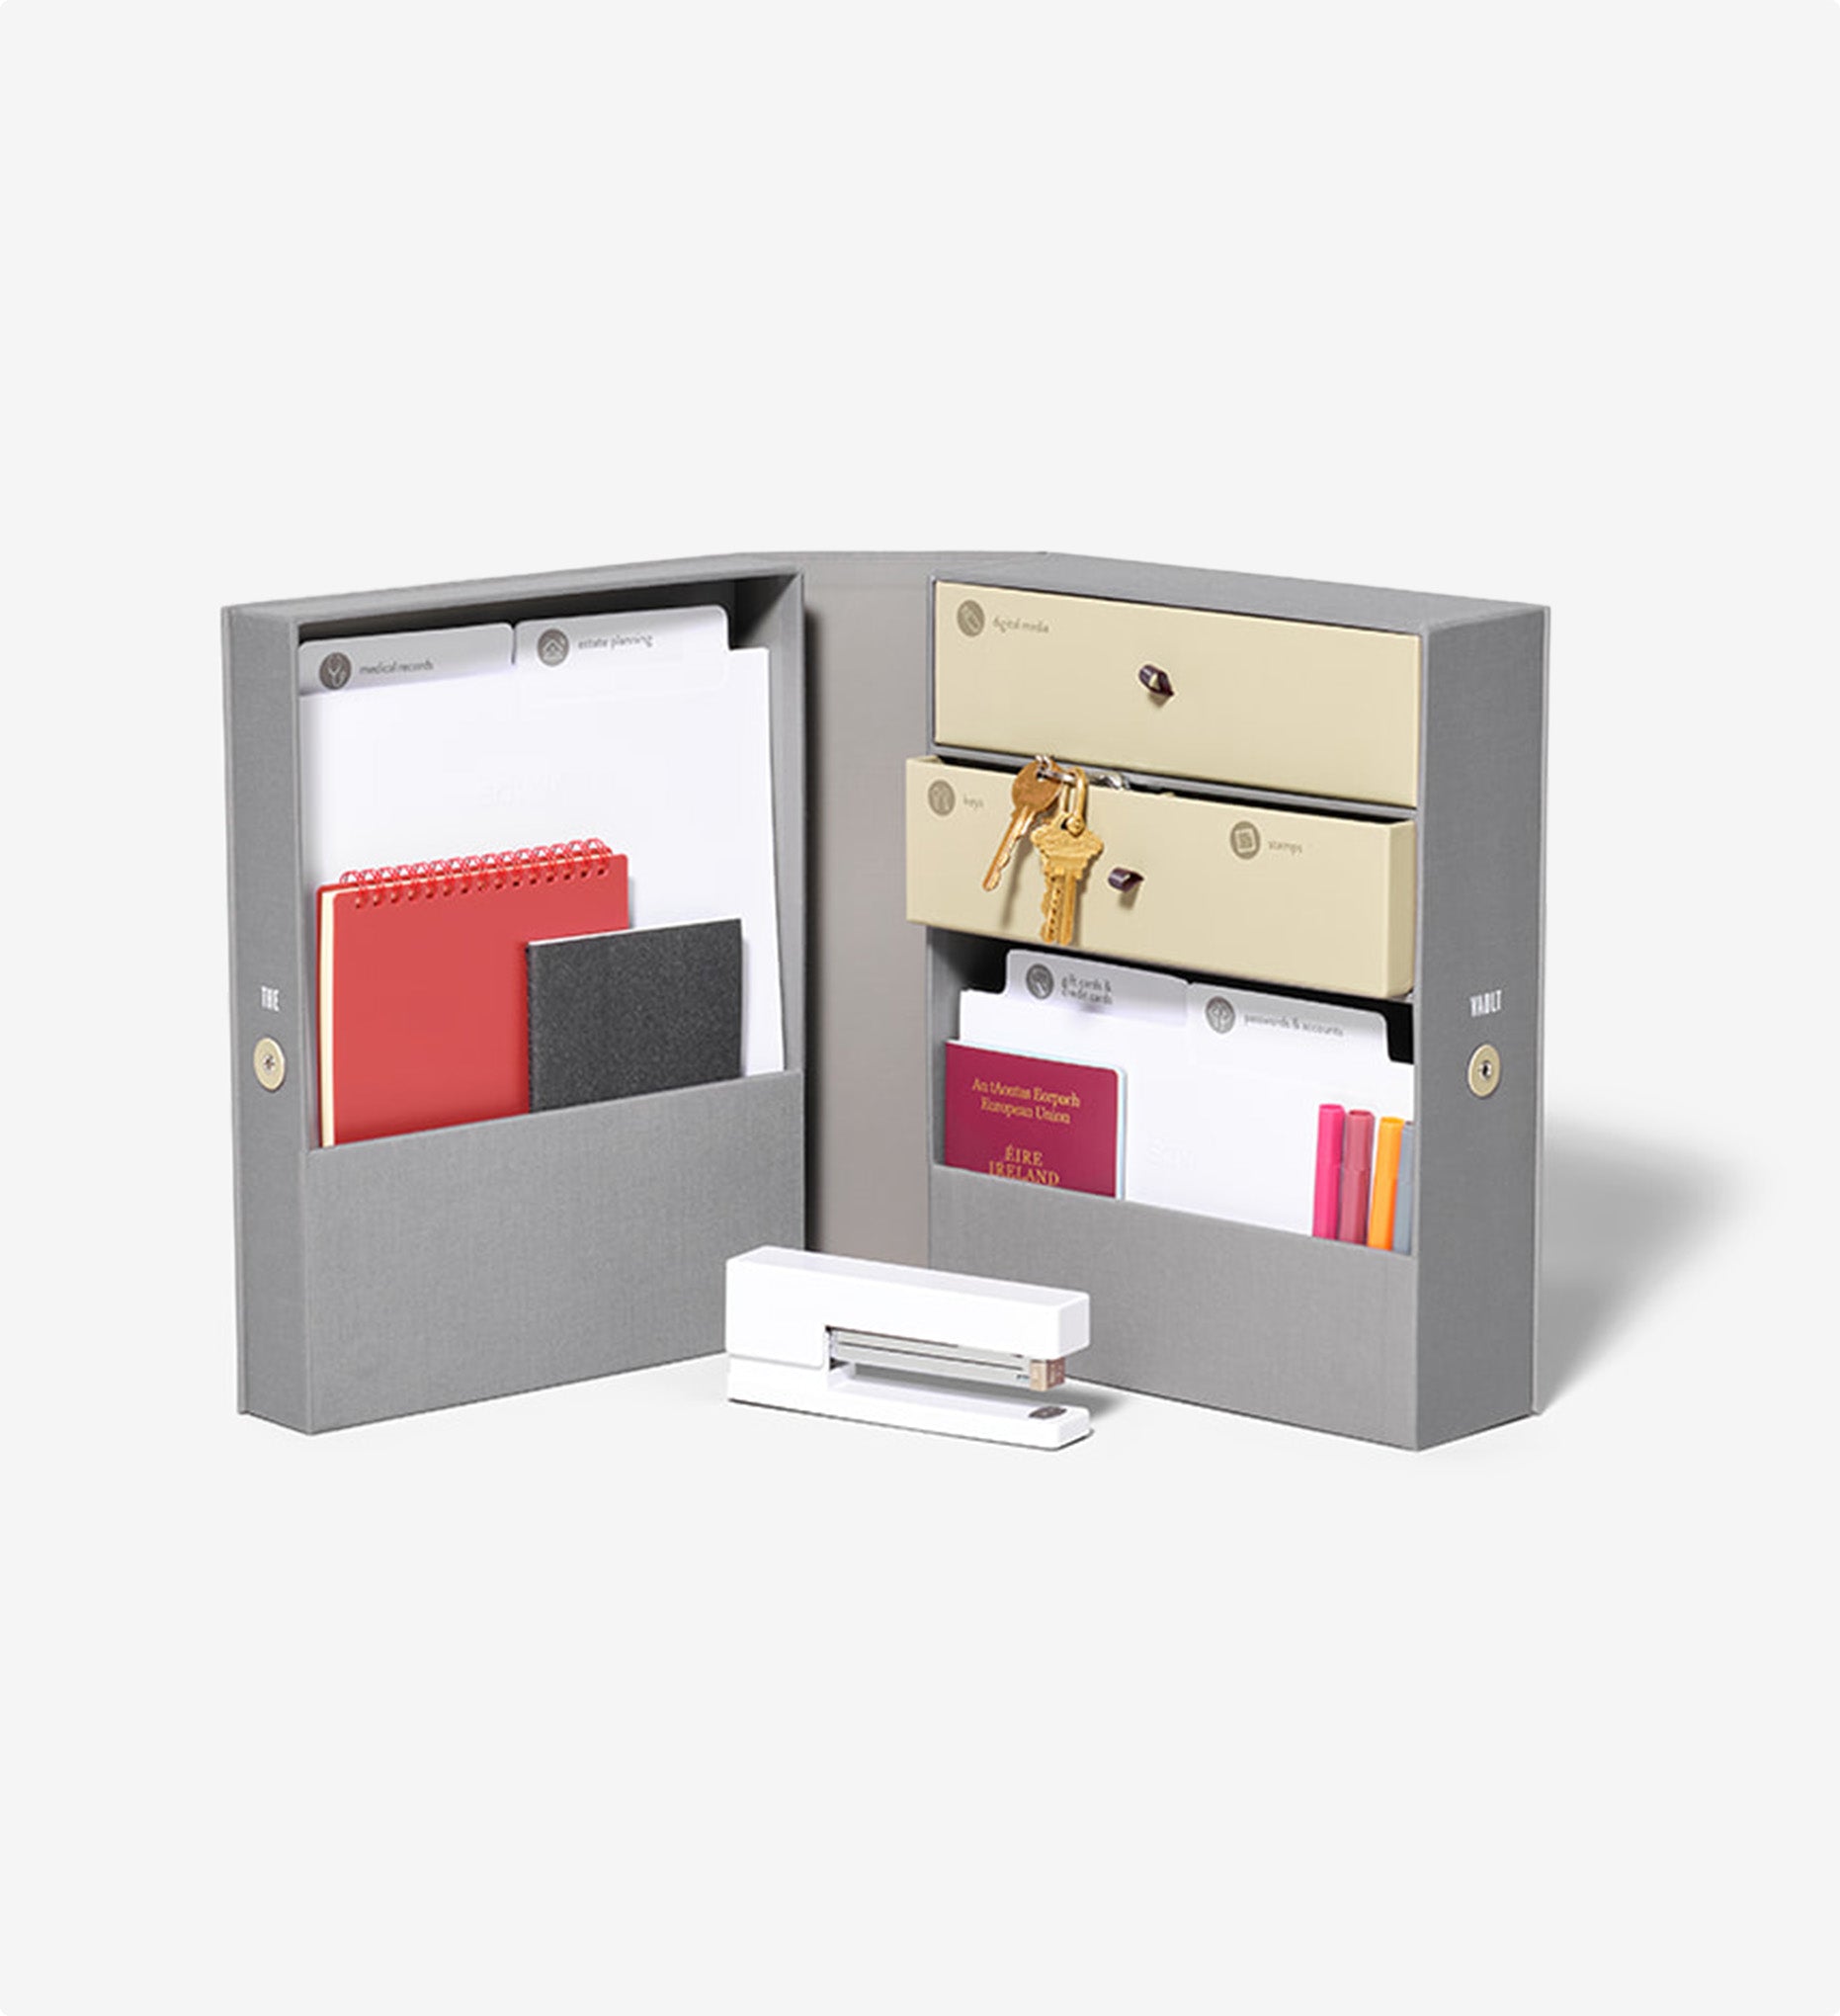 Savor Desk organizer keepsake box  with a passport, a set of keys, a notebook and other items